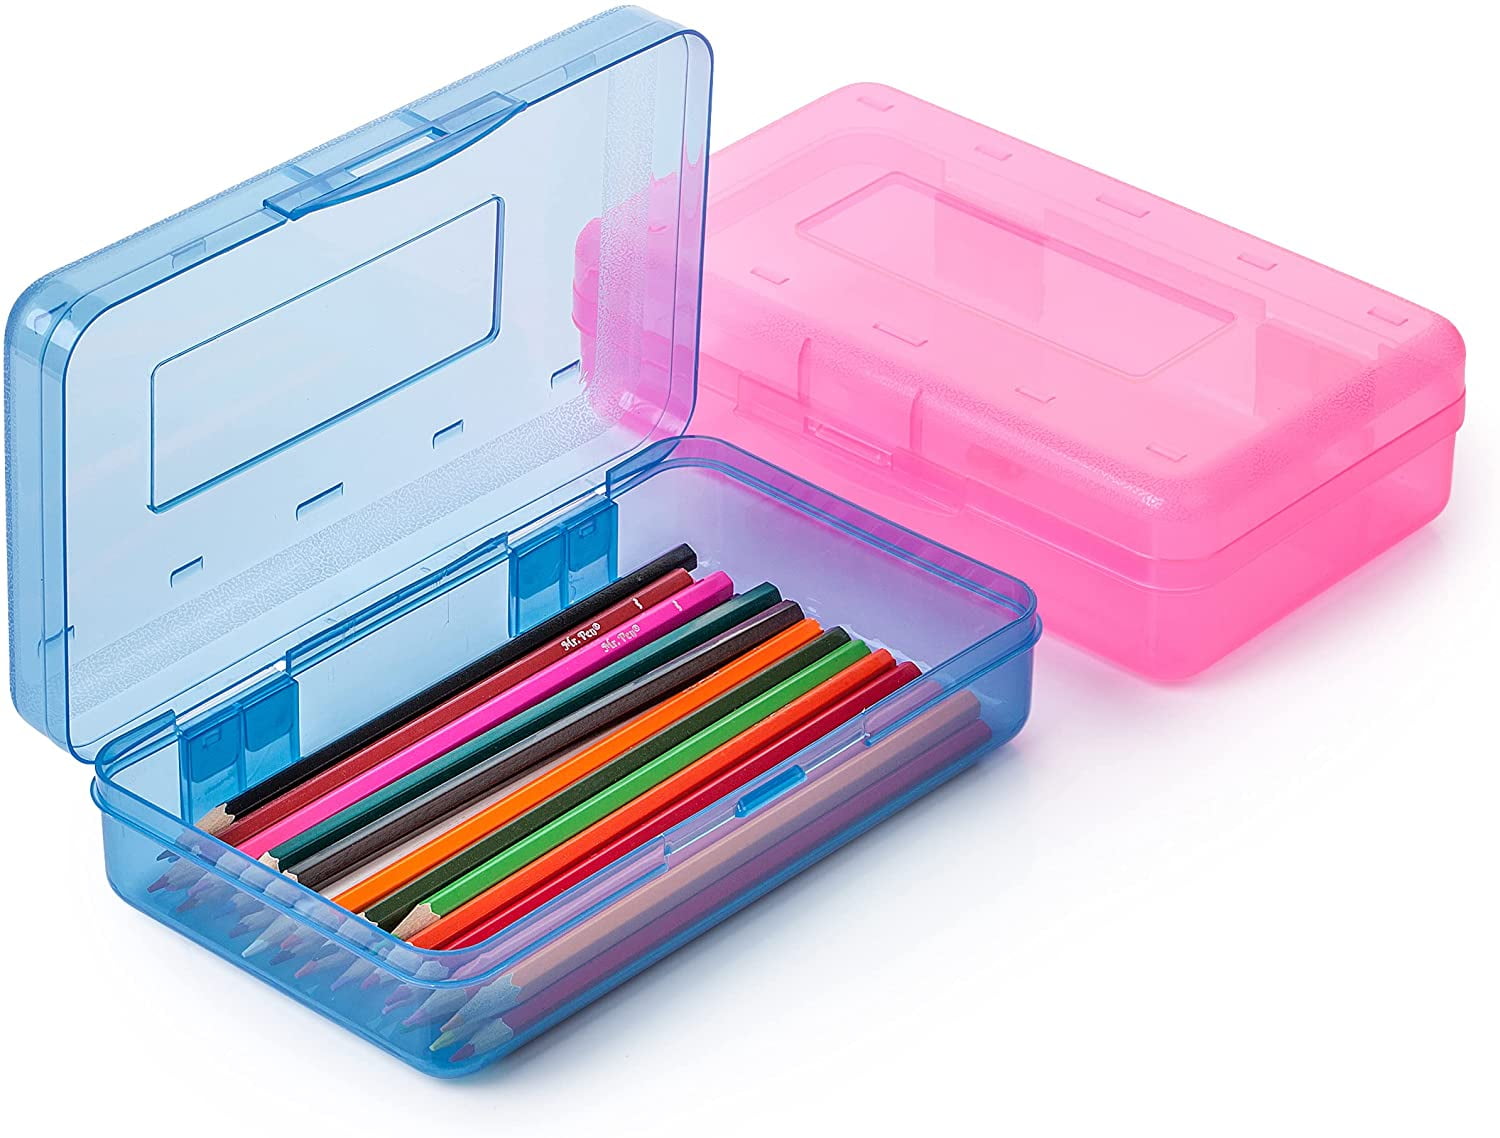 8" x 5" x 2" Wholesale Case of 24 Student Discount Storage Pencil Box 